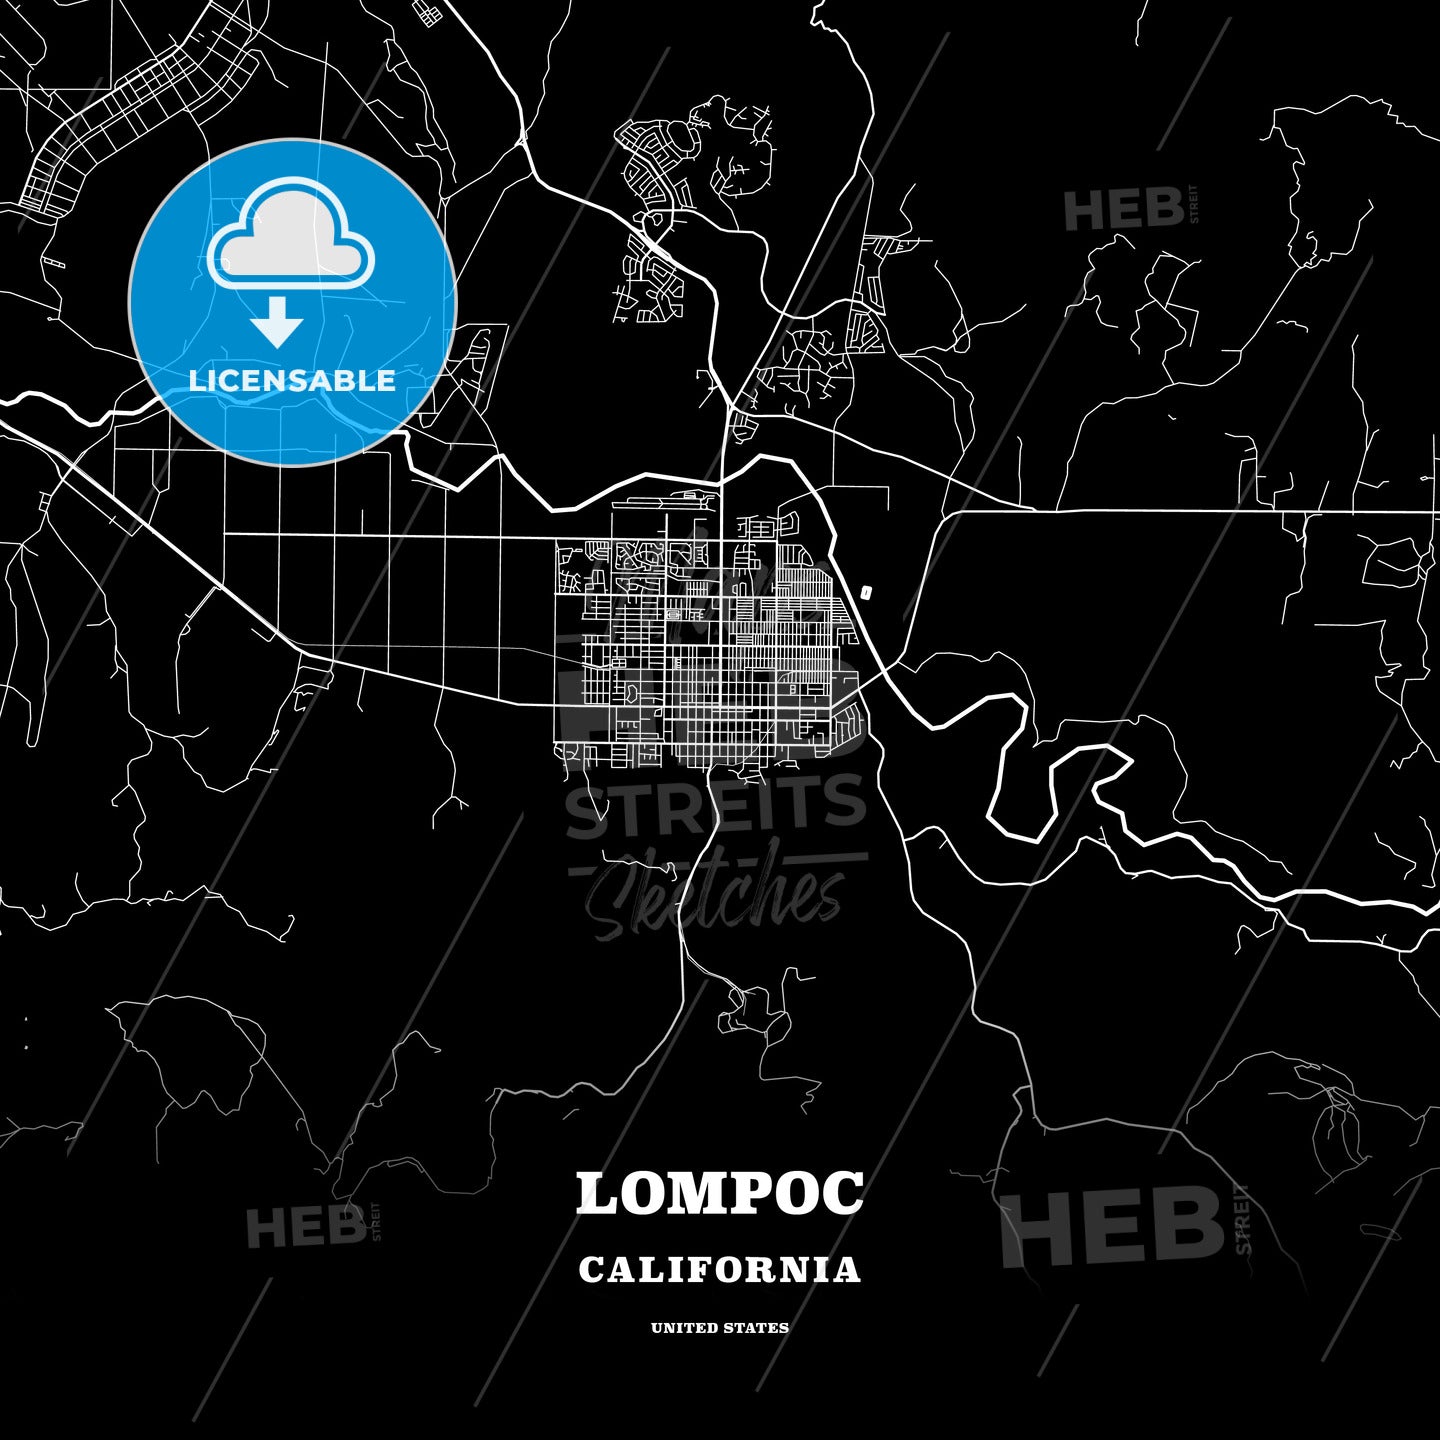 Lompoc, California, USA map